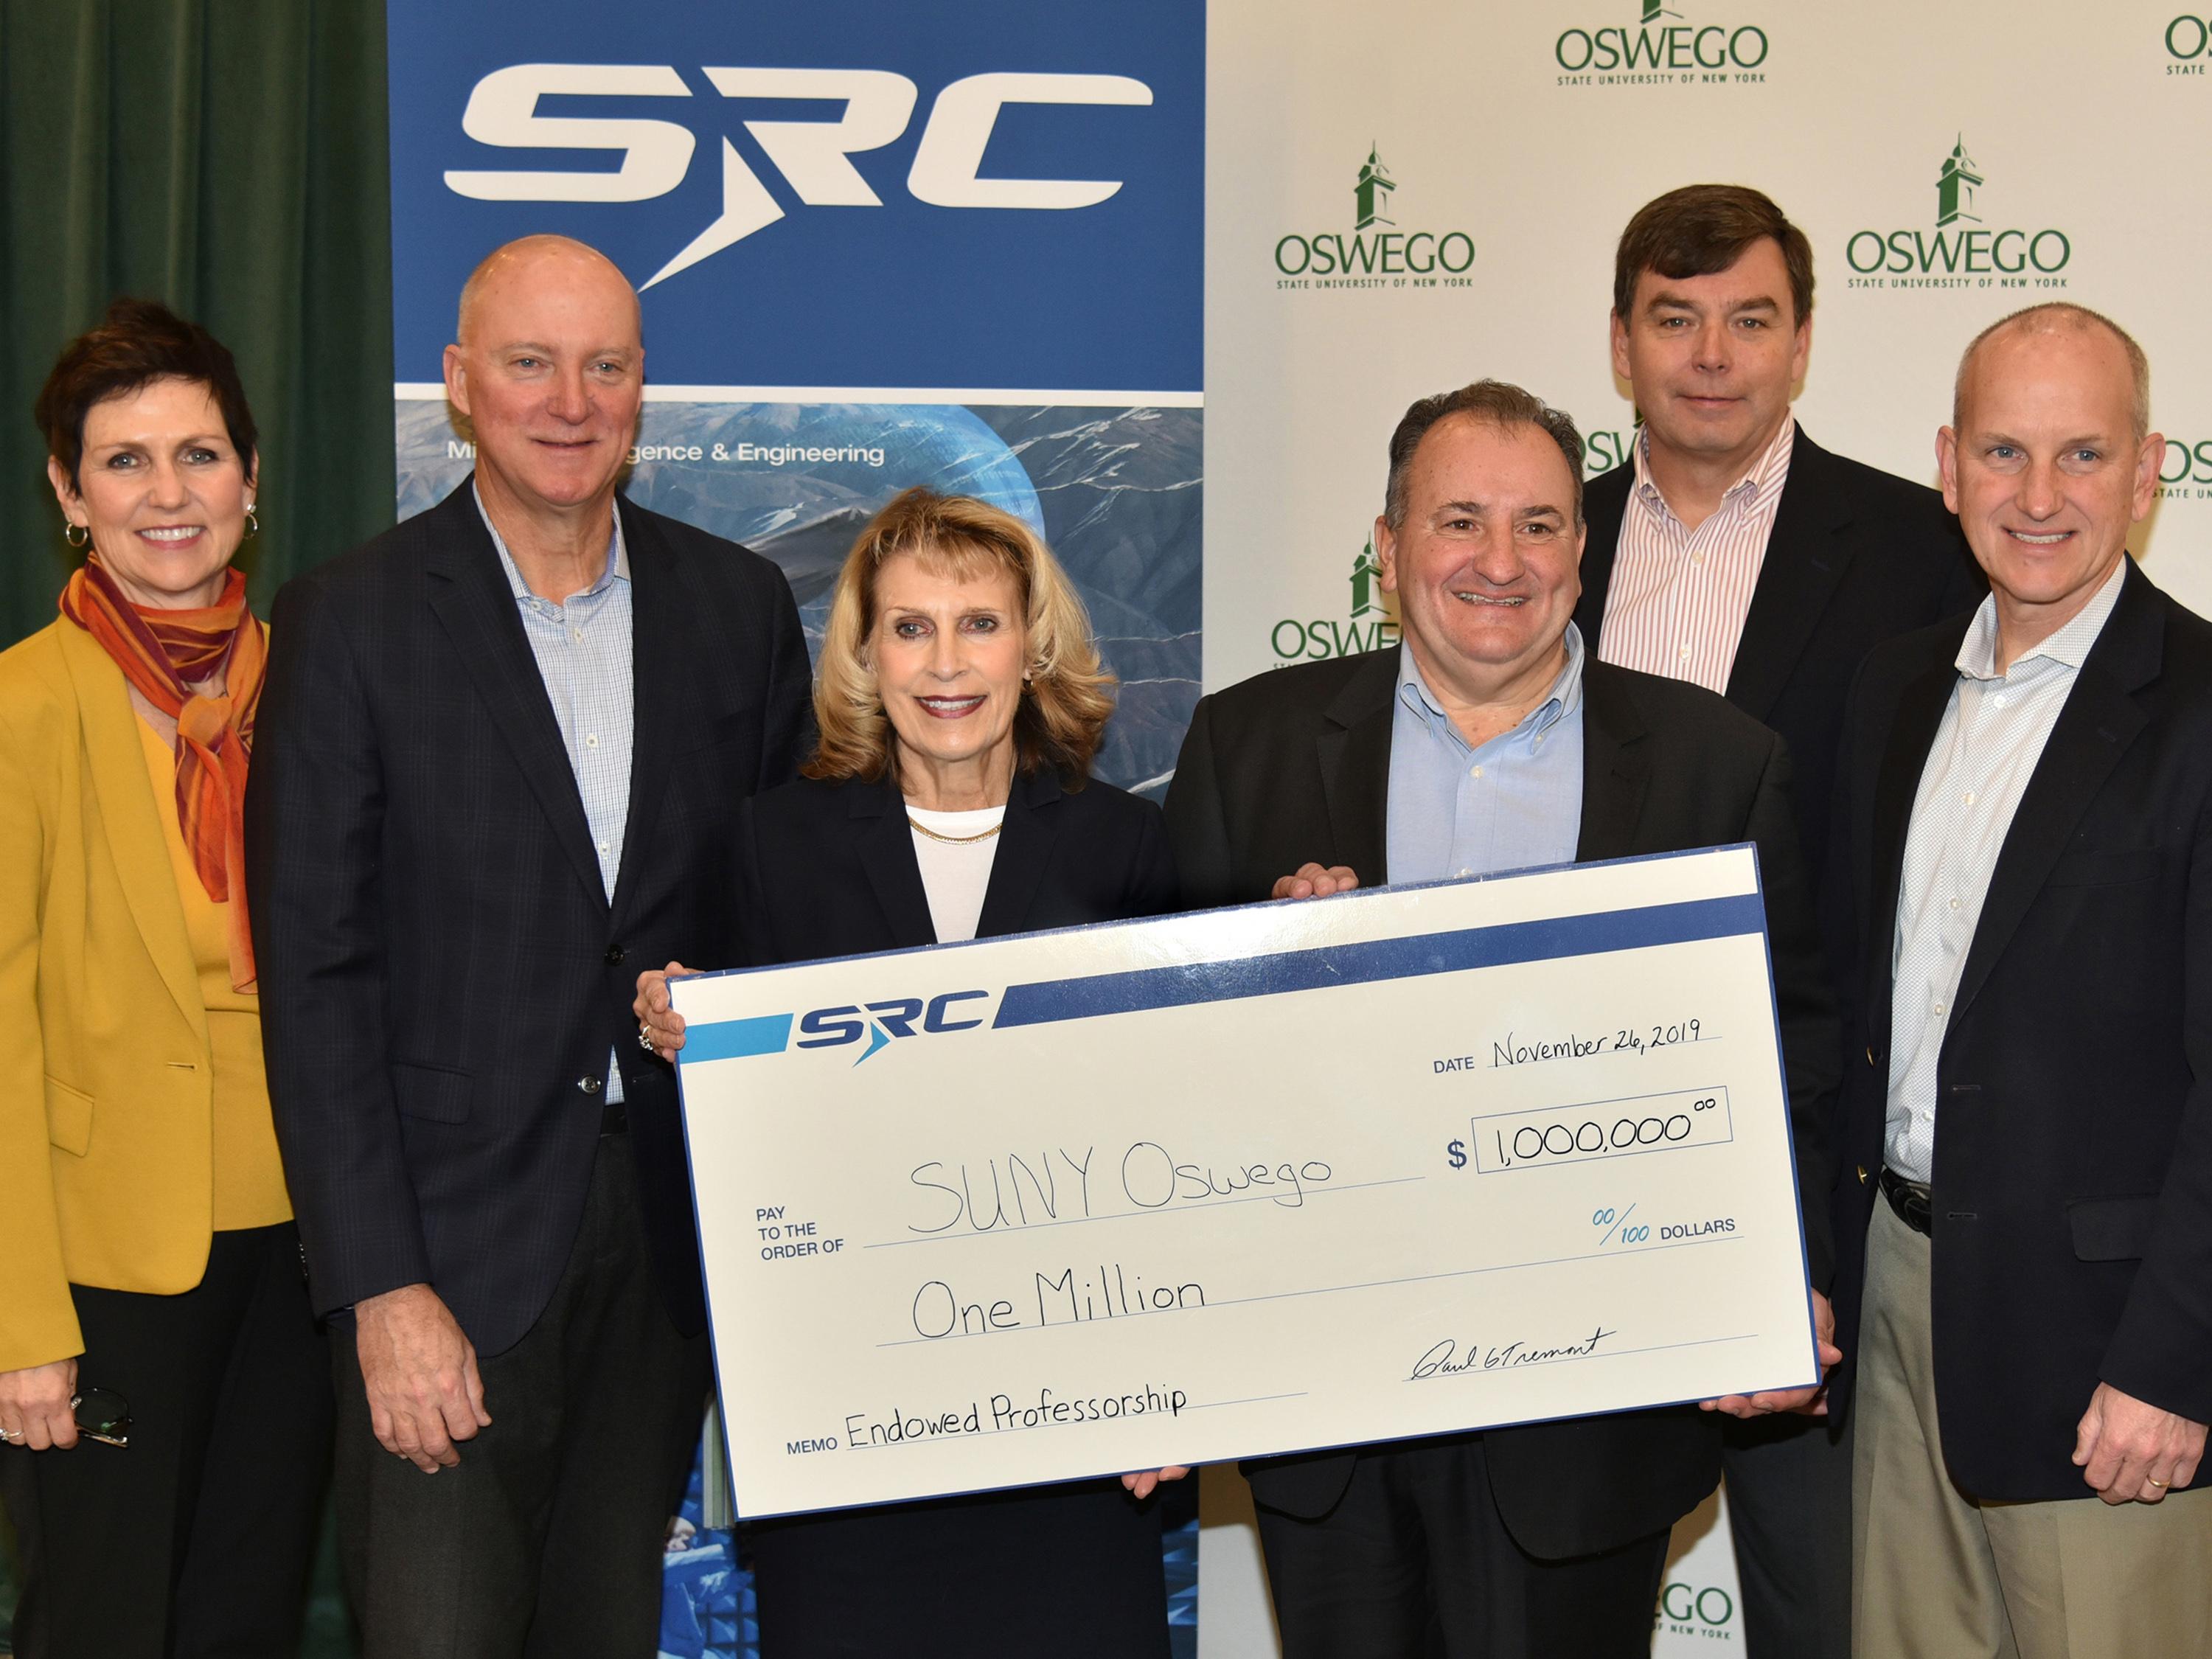 SRC Inc. presents a $1 million gift to SUNY Oswego to establish an endowed professorship in engineering